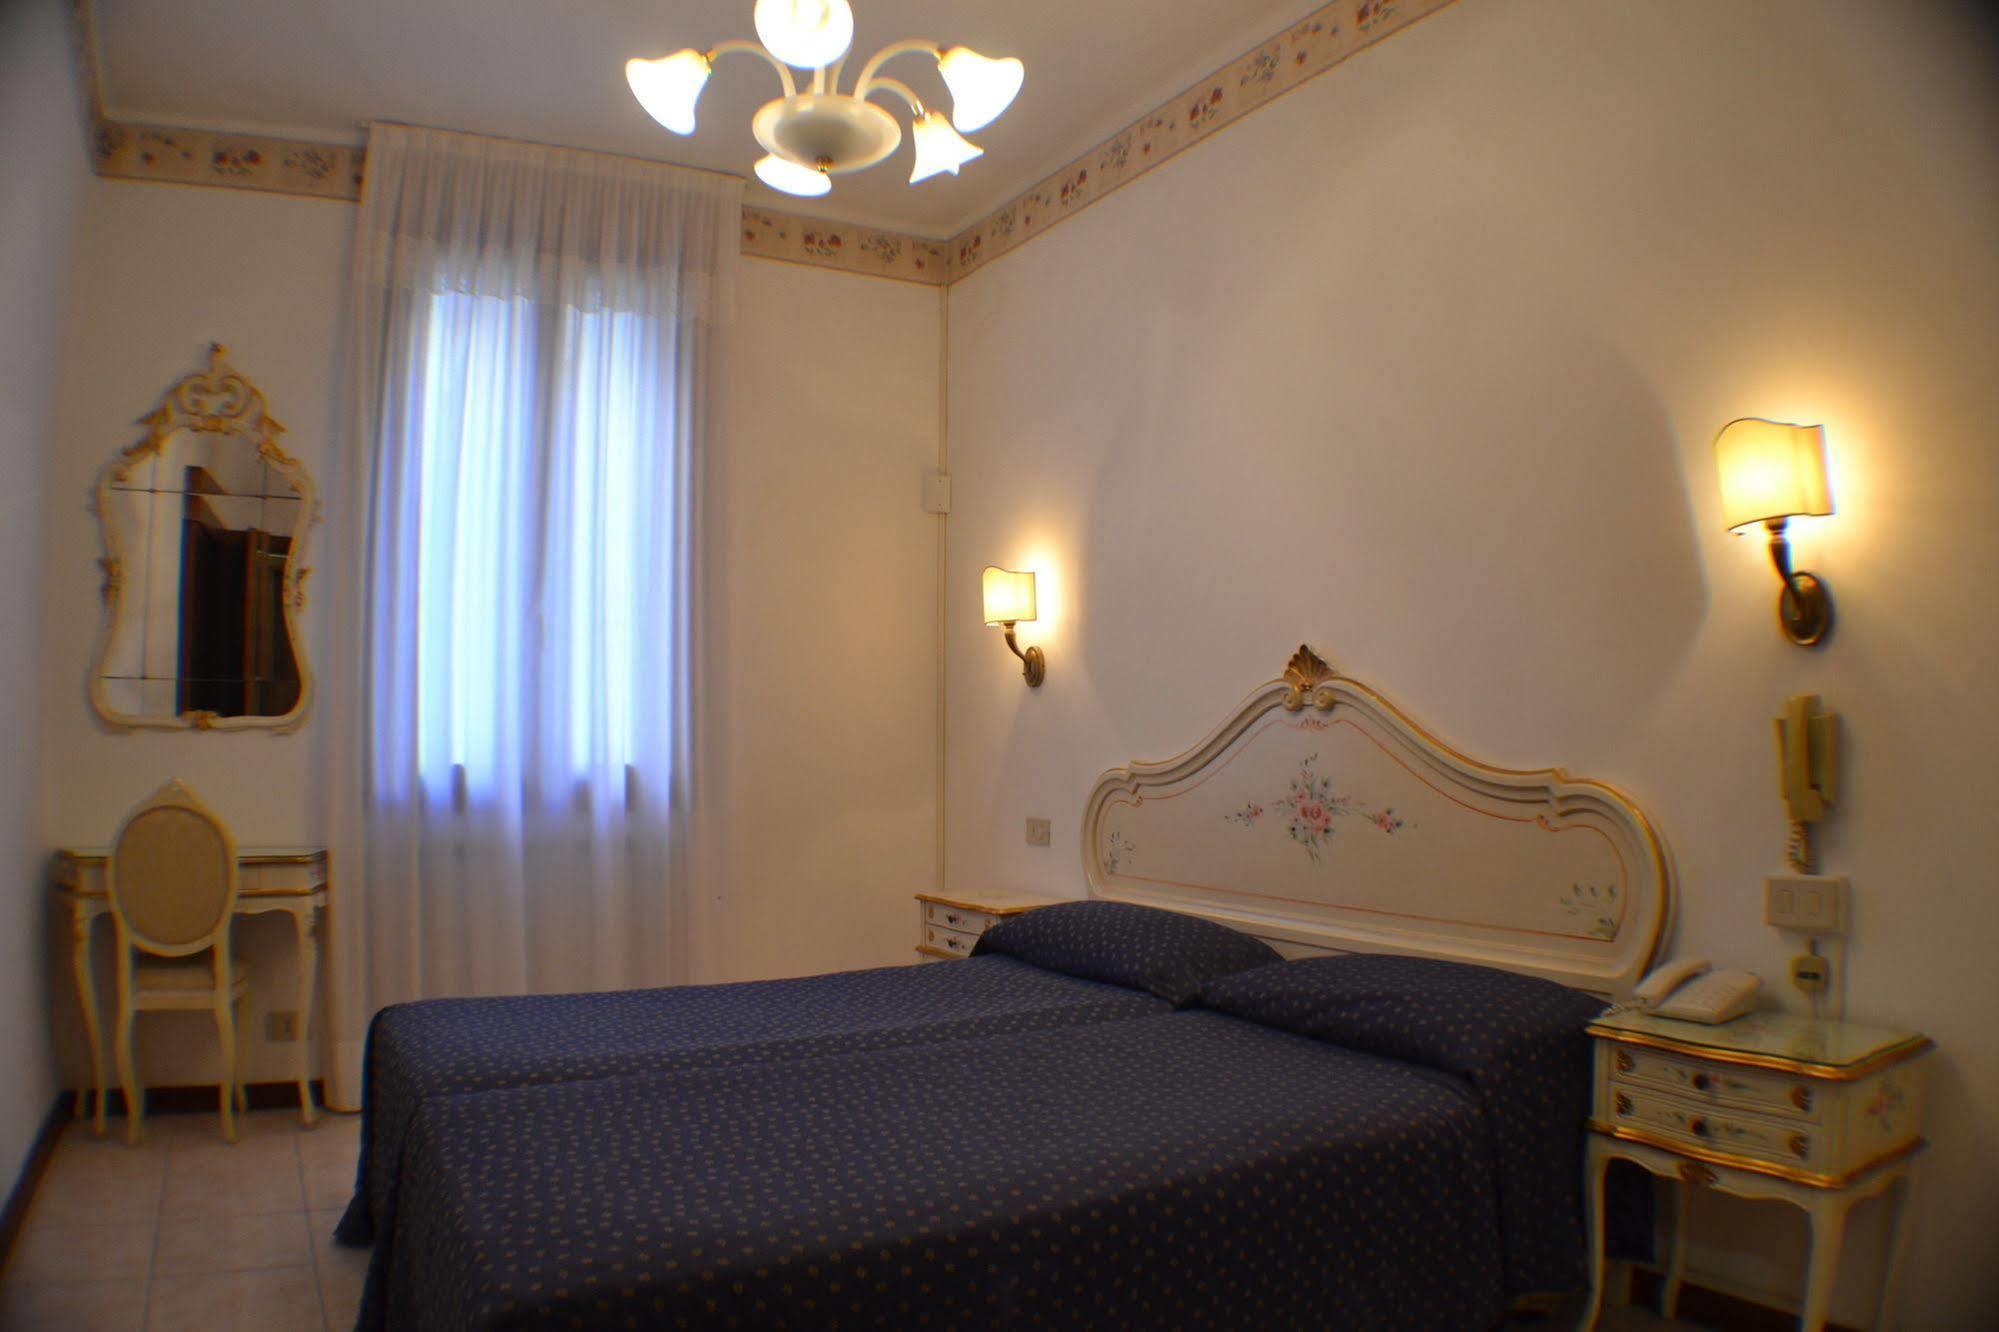 Hotel Guerrini Βενετία Εξωτερικό φωτογραφία